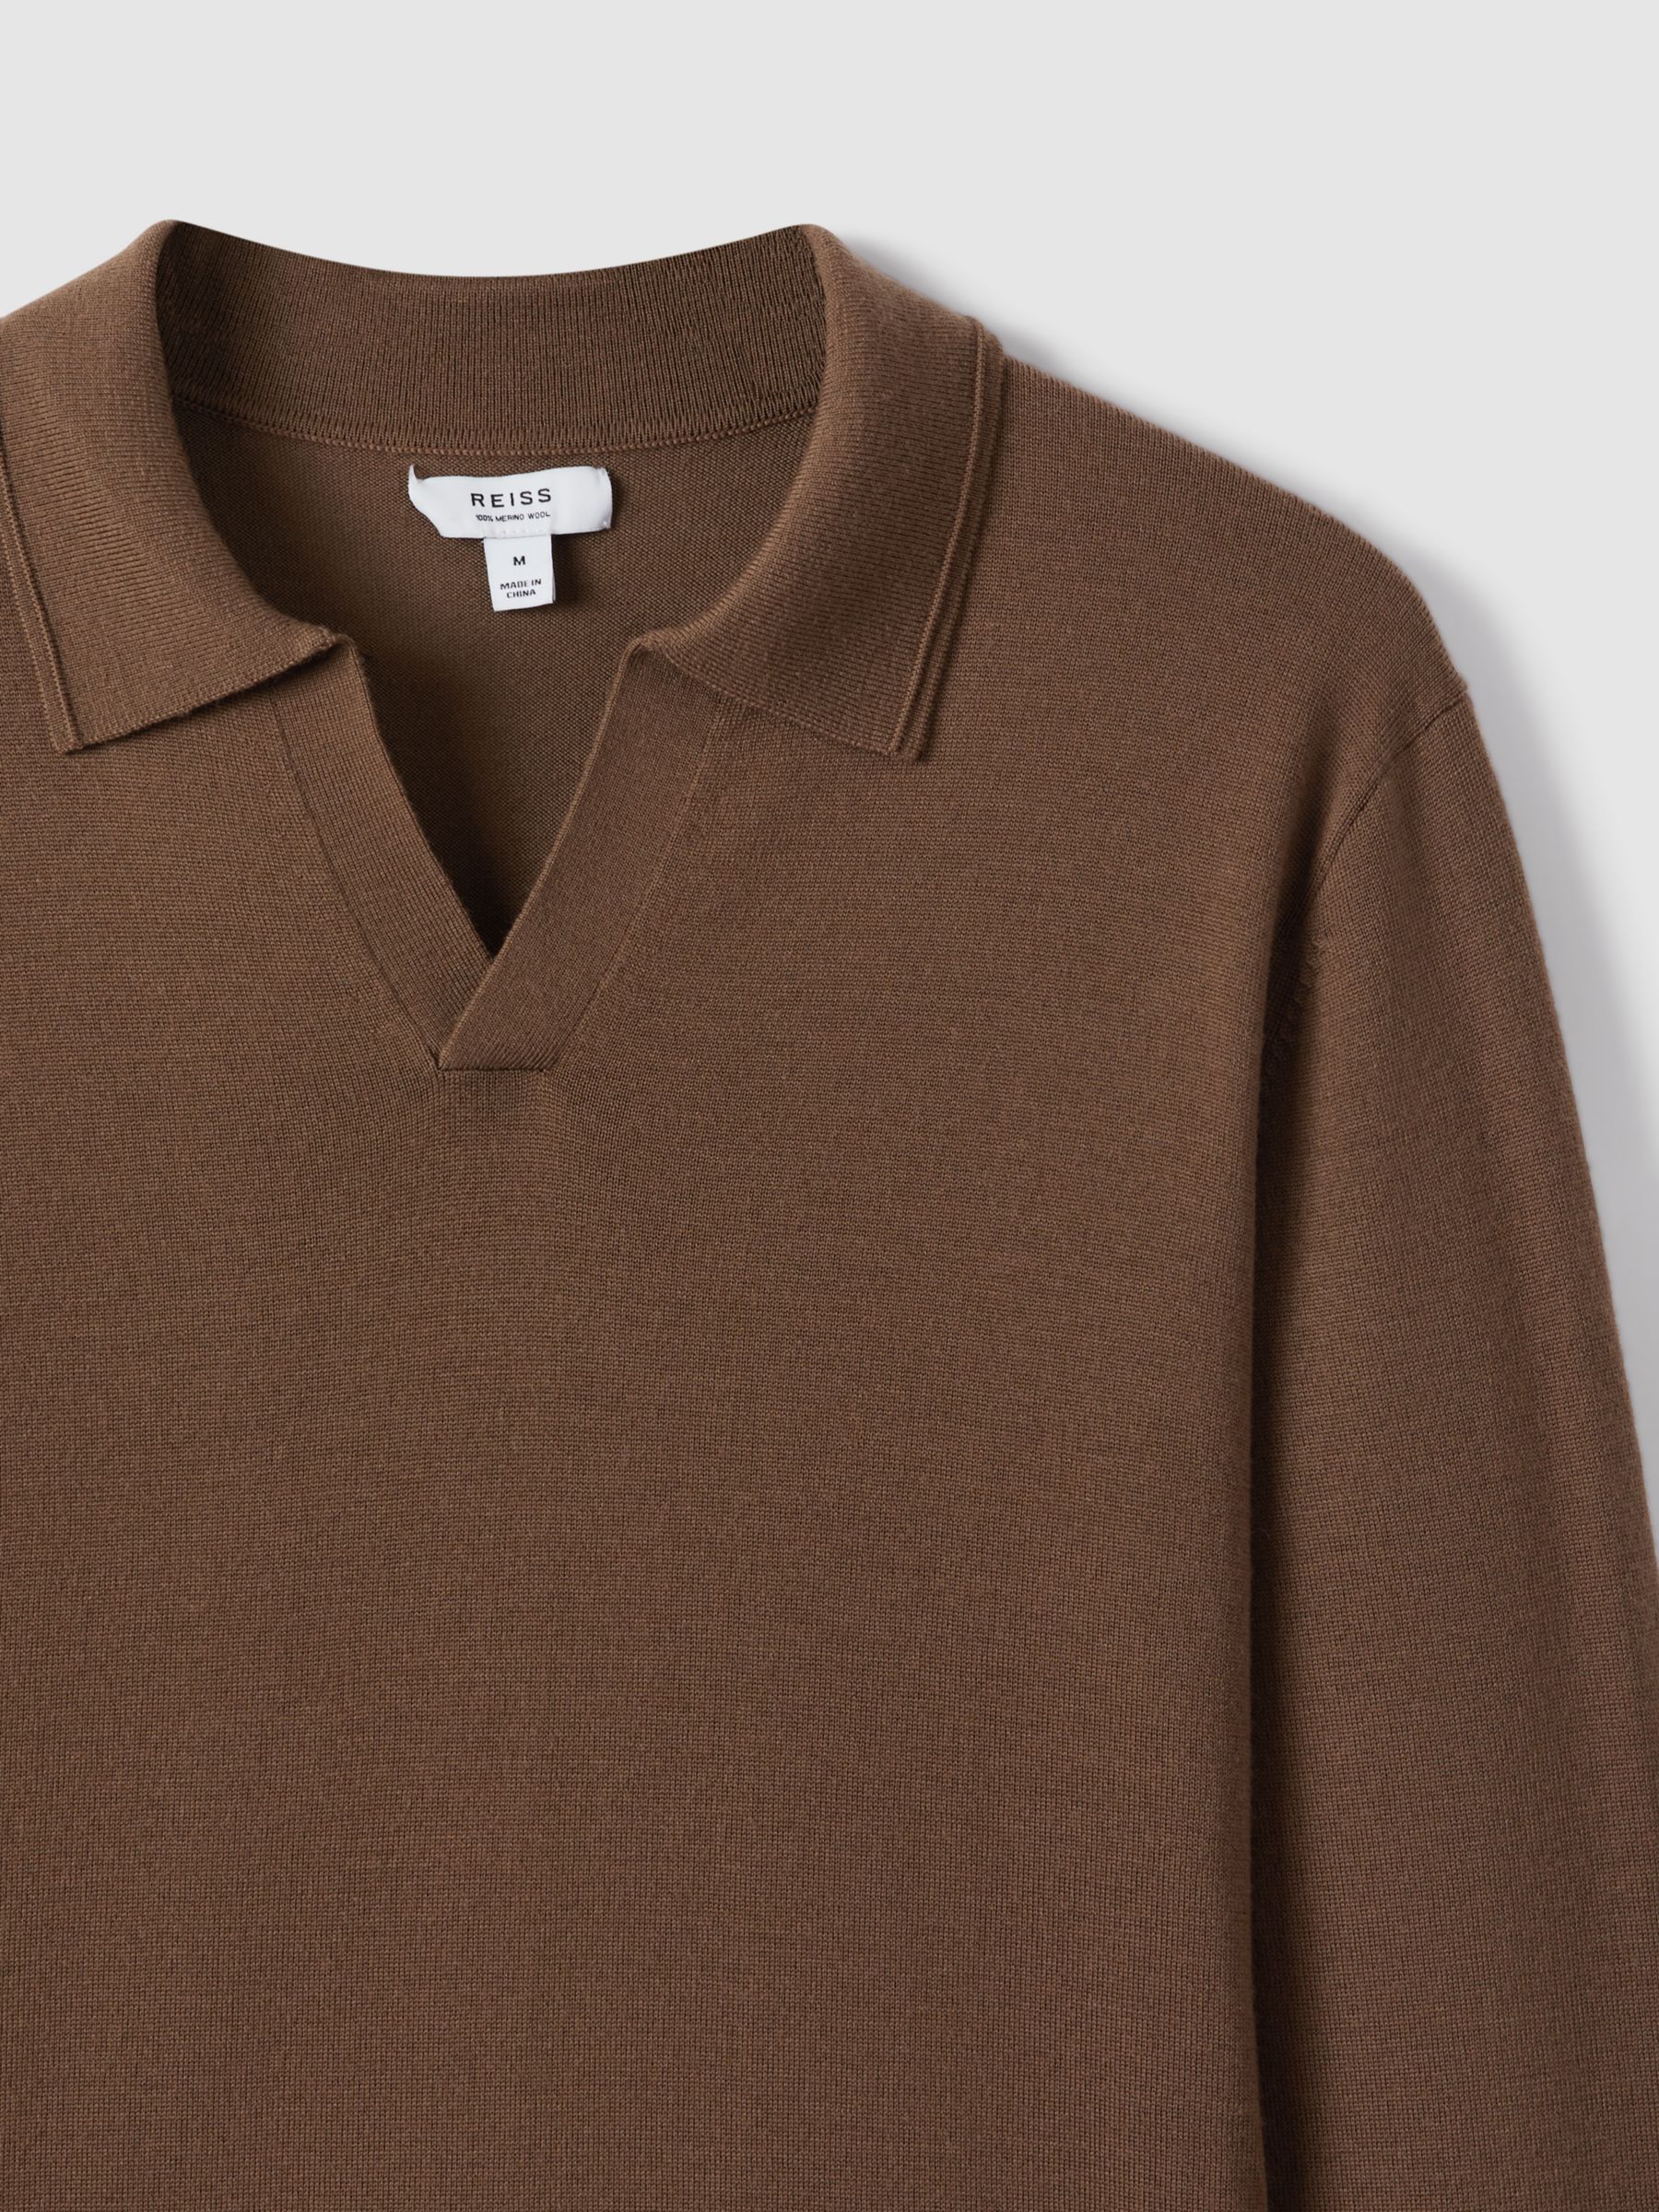 Reiss Milburn Merino Wool Polo Shirt, Pecan Brown, XL